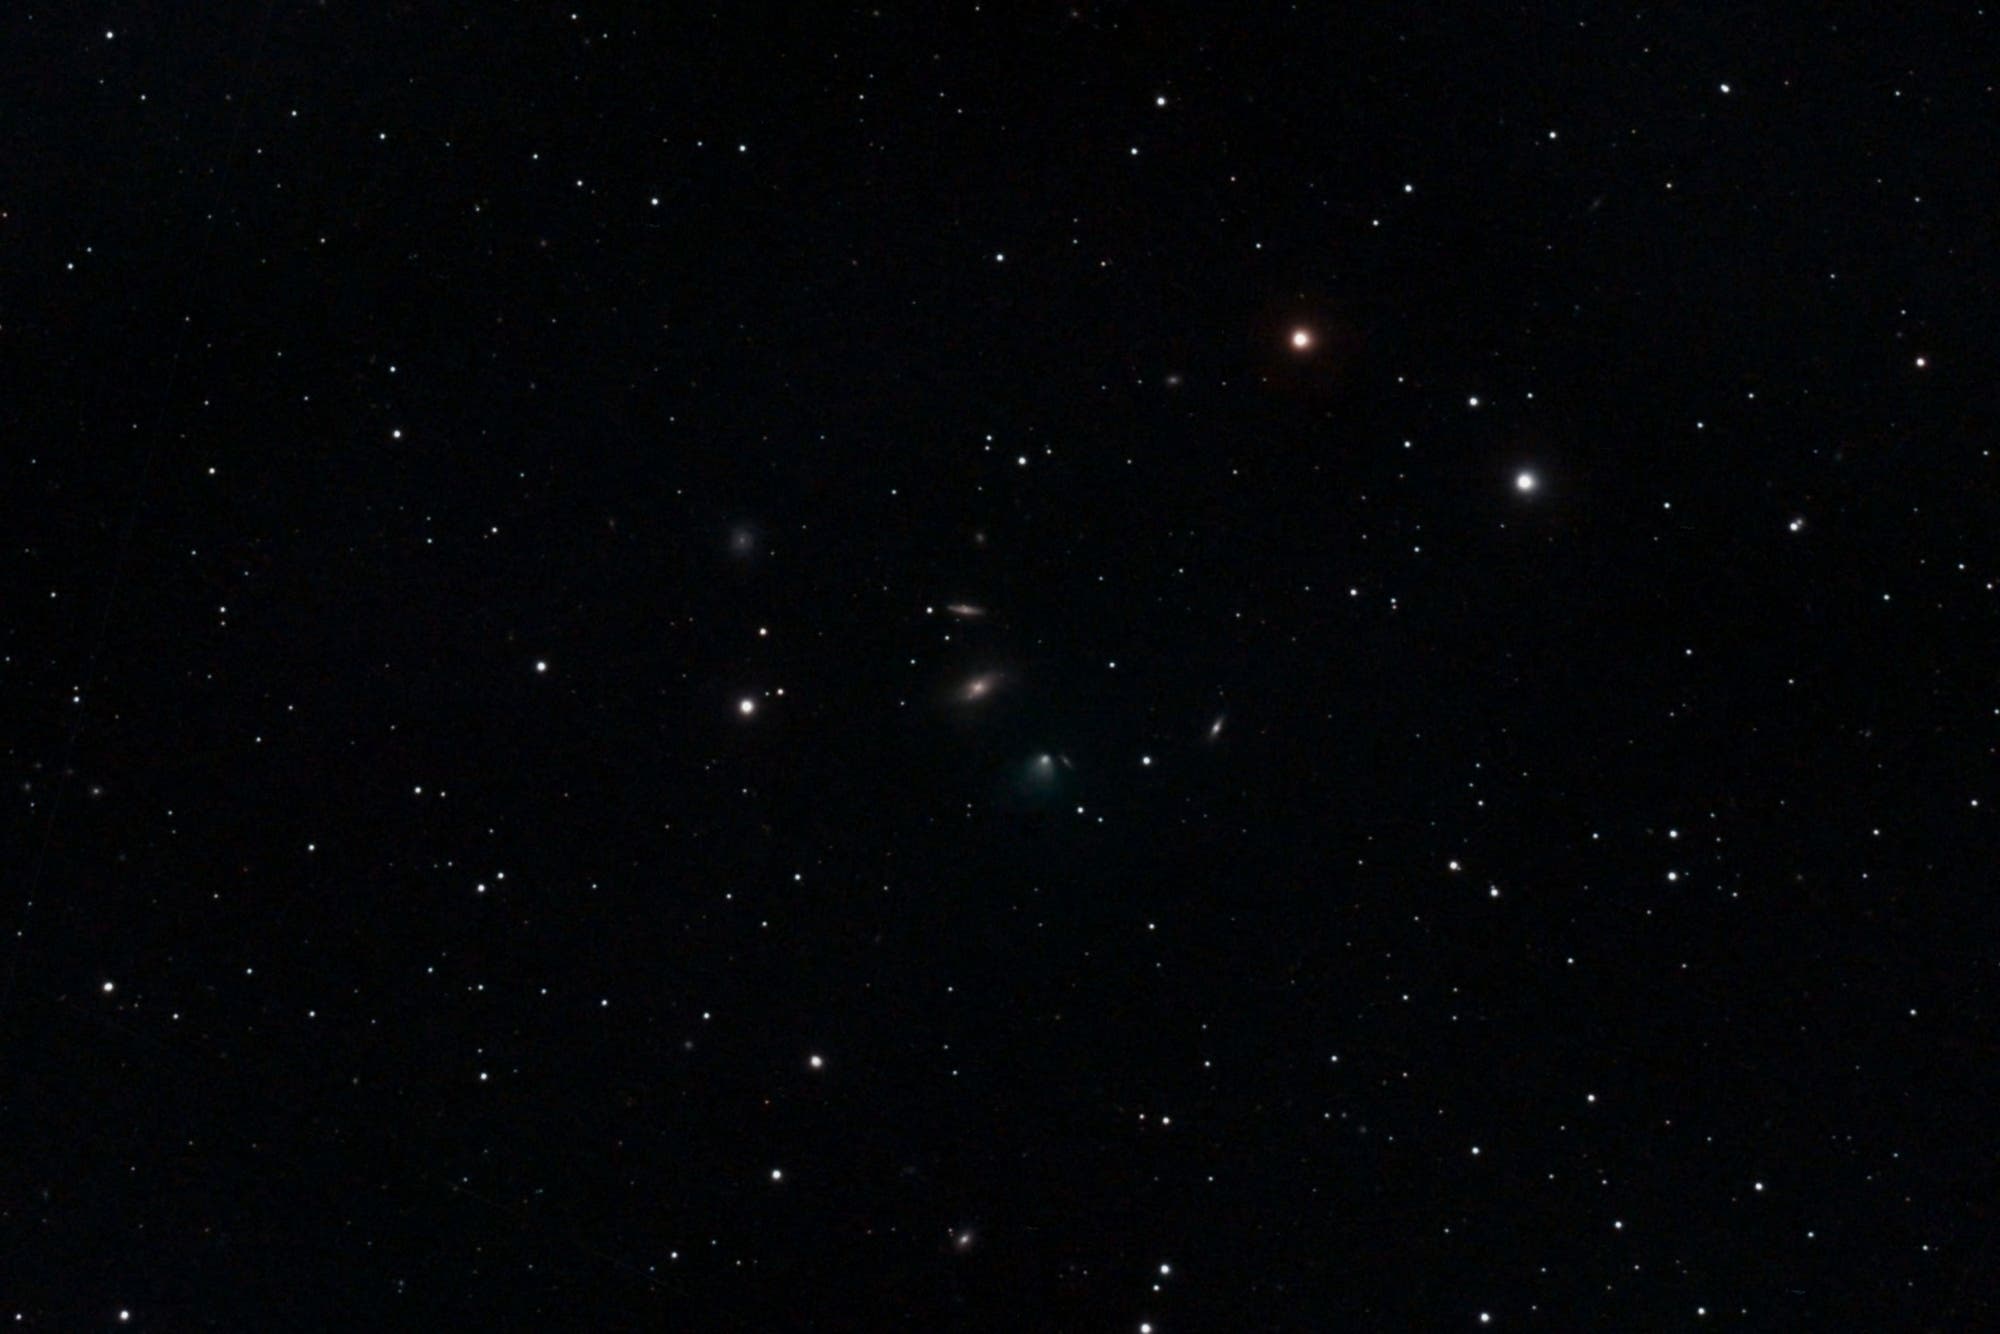 Komet 9P/Tempel und Kleinplanet (6) Hebe "bei" NGC 3801